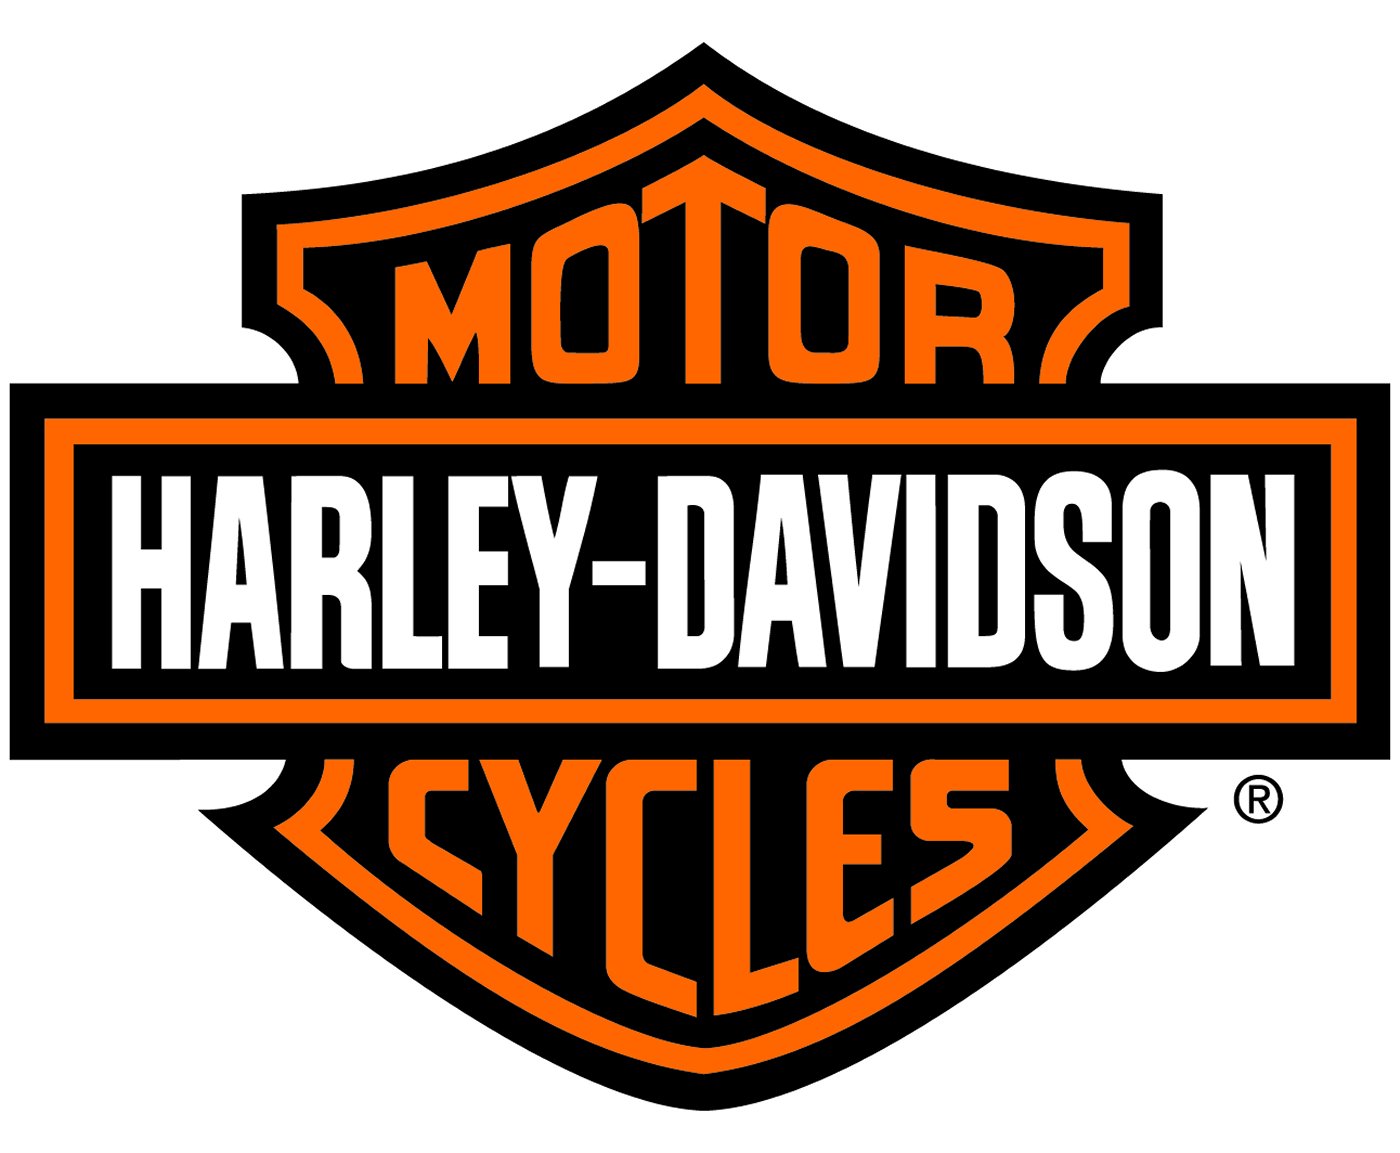 Free Harley Davidson Logo Stencil, Download Free Harley Davidson Logo